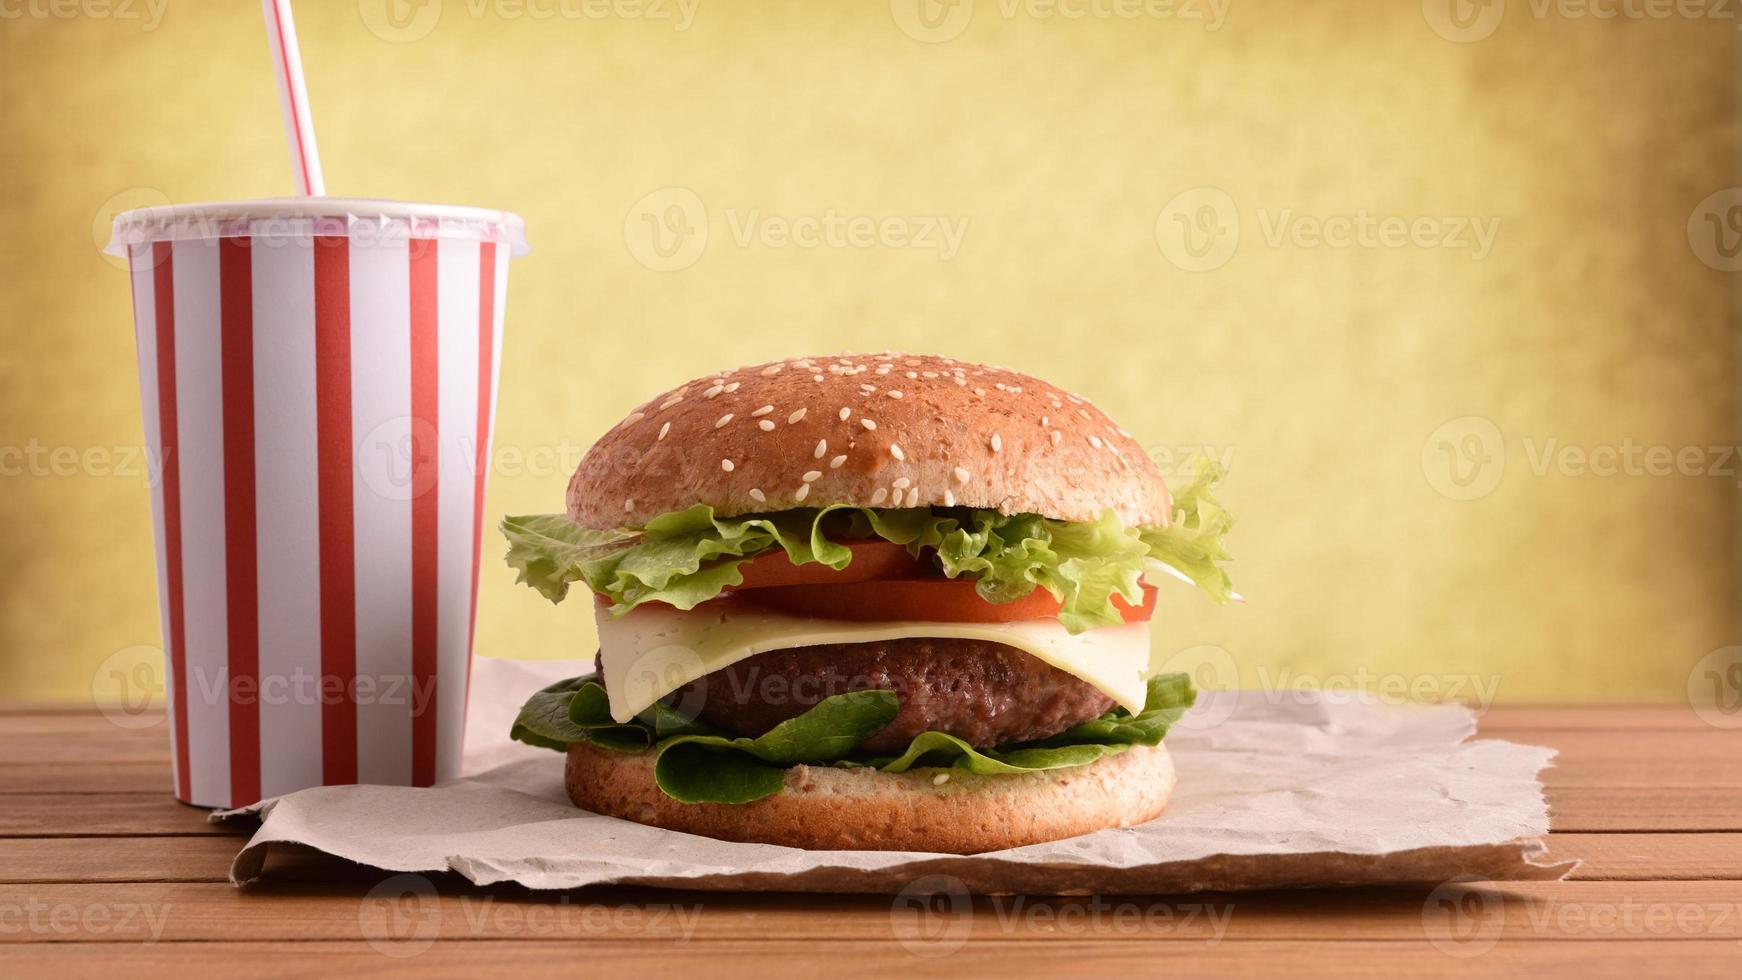 hamburguesa de ternera con refresco en la mesa foto